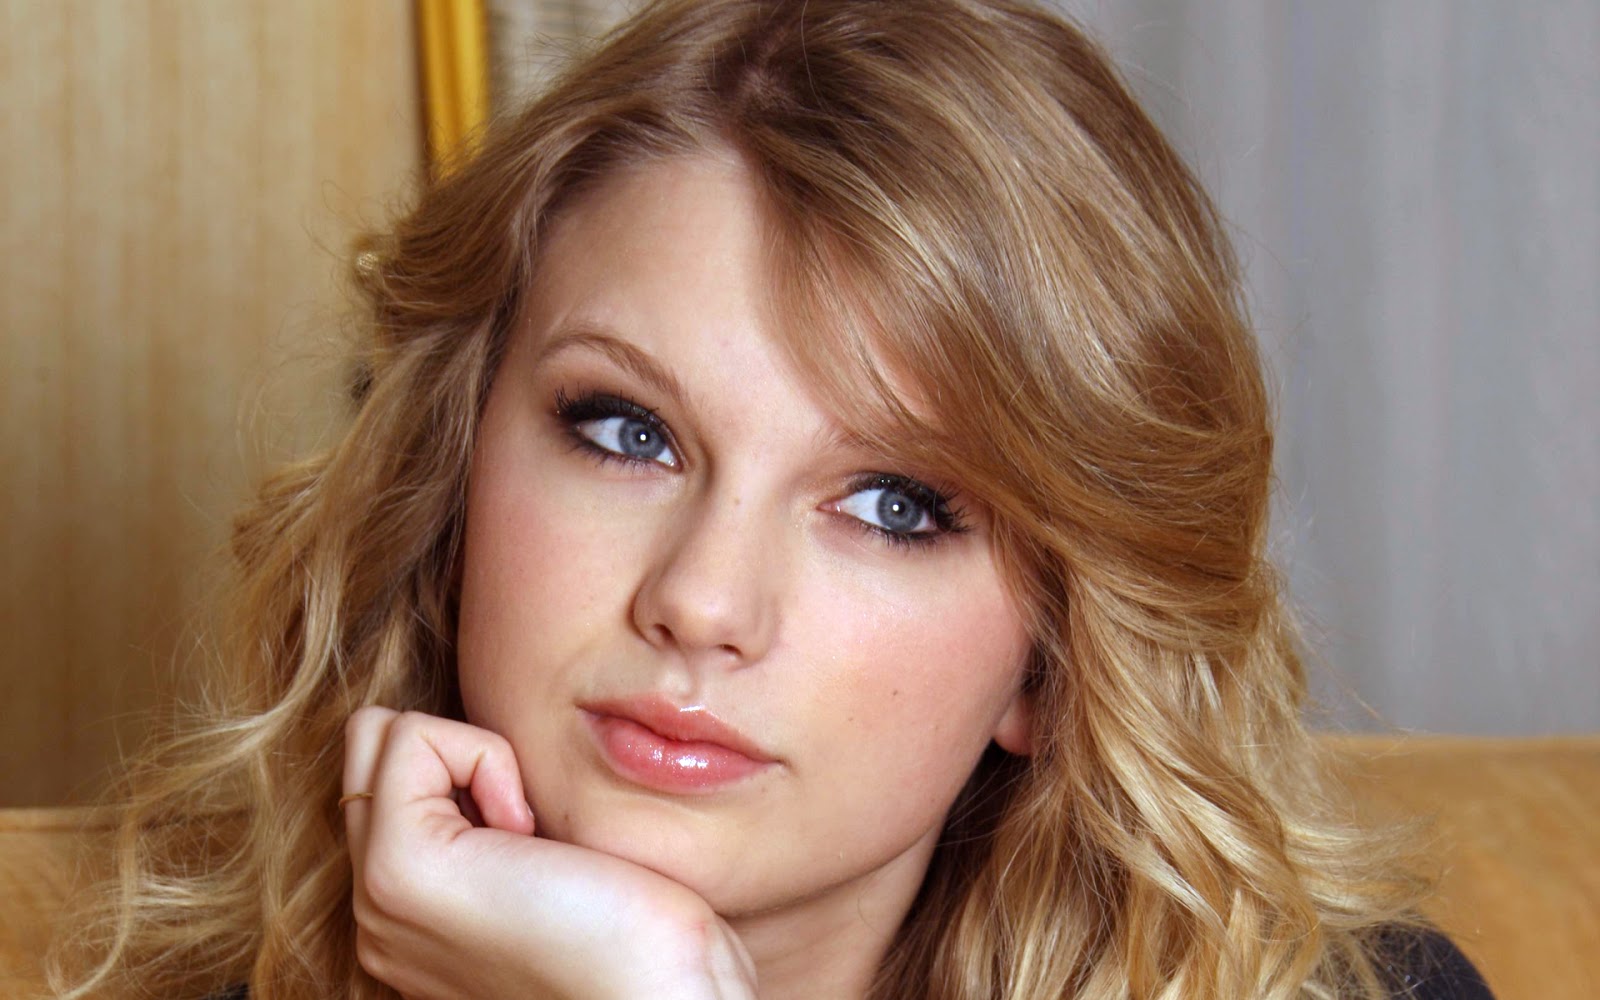 Taylor-Swift-Widescreen-Wallpapers | wallpapers55.com - Best ...